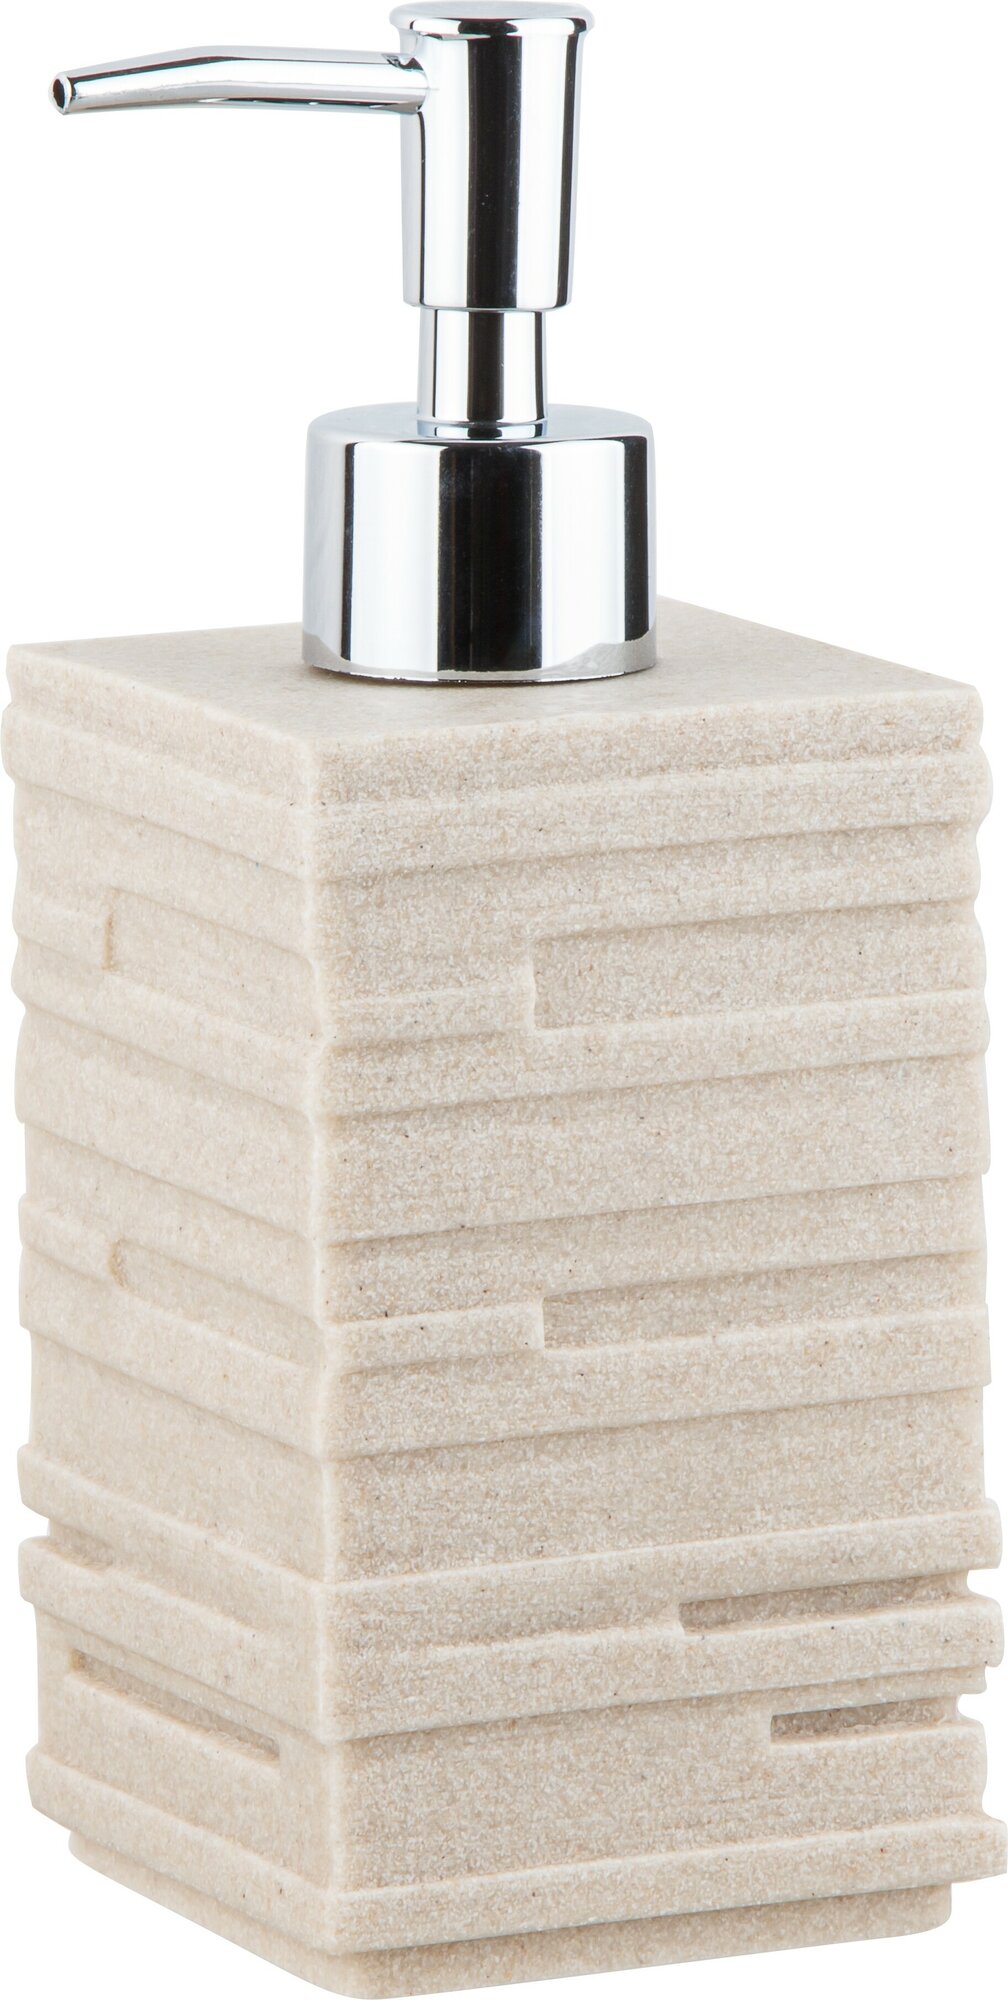 Дозатор для мыла PERFECTO LINEA Weathered Sand бежевый (35-151100)